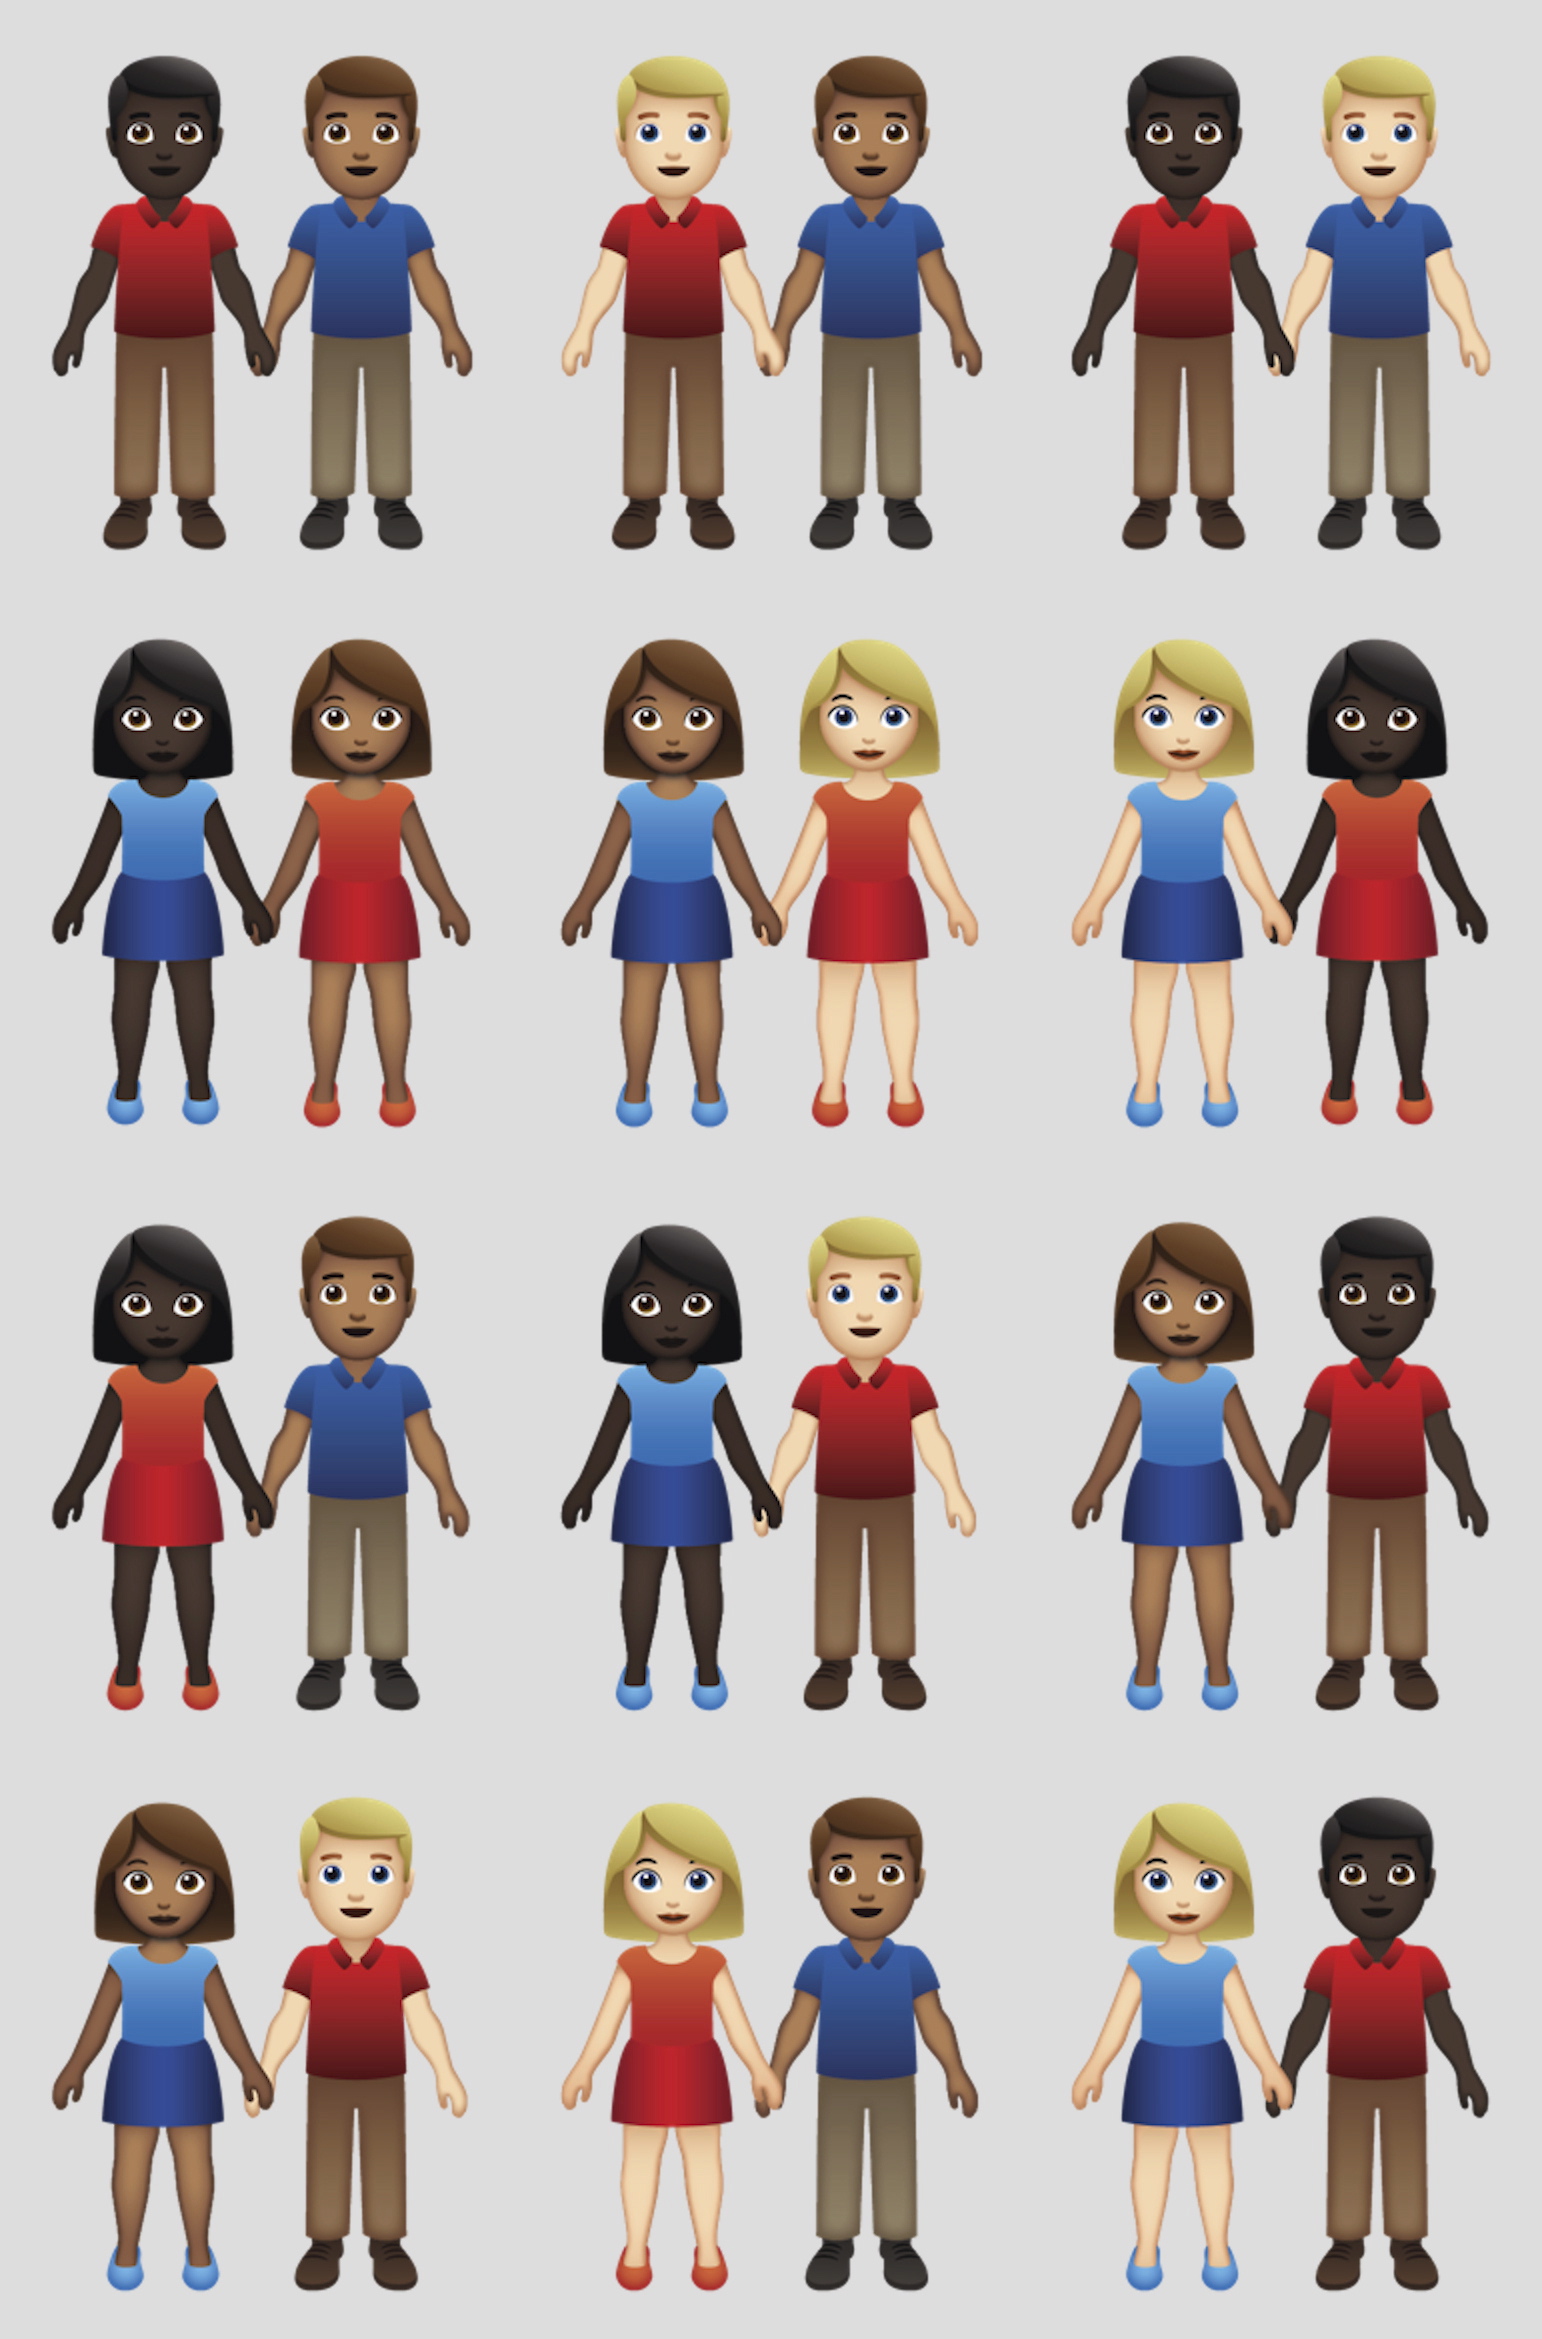 Tinder Swipes Right On Emoji Equality, Demanding Interracial Couple Representation